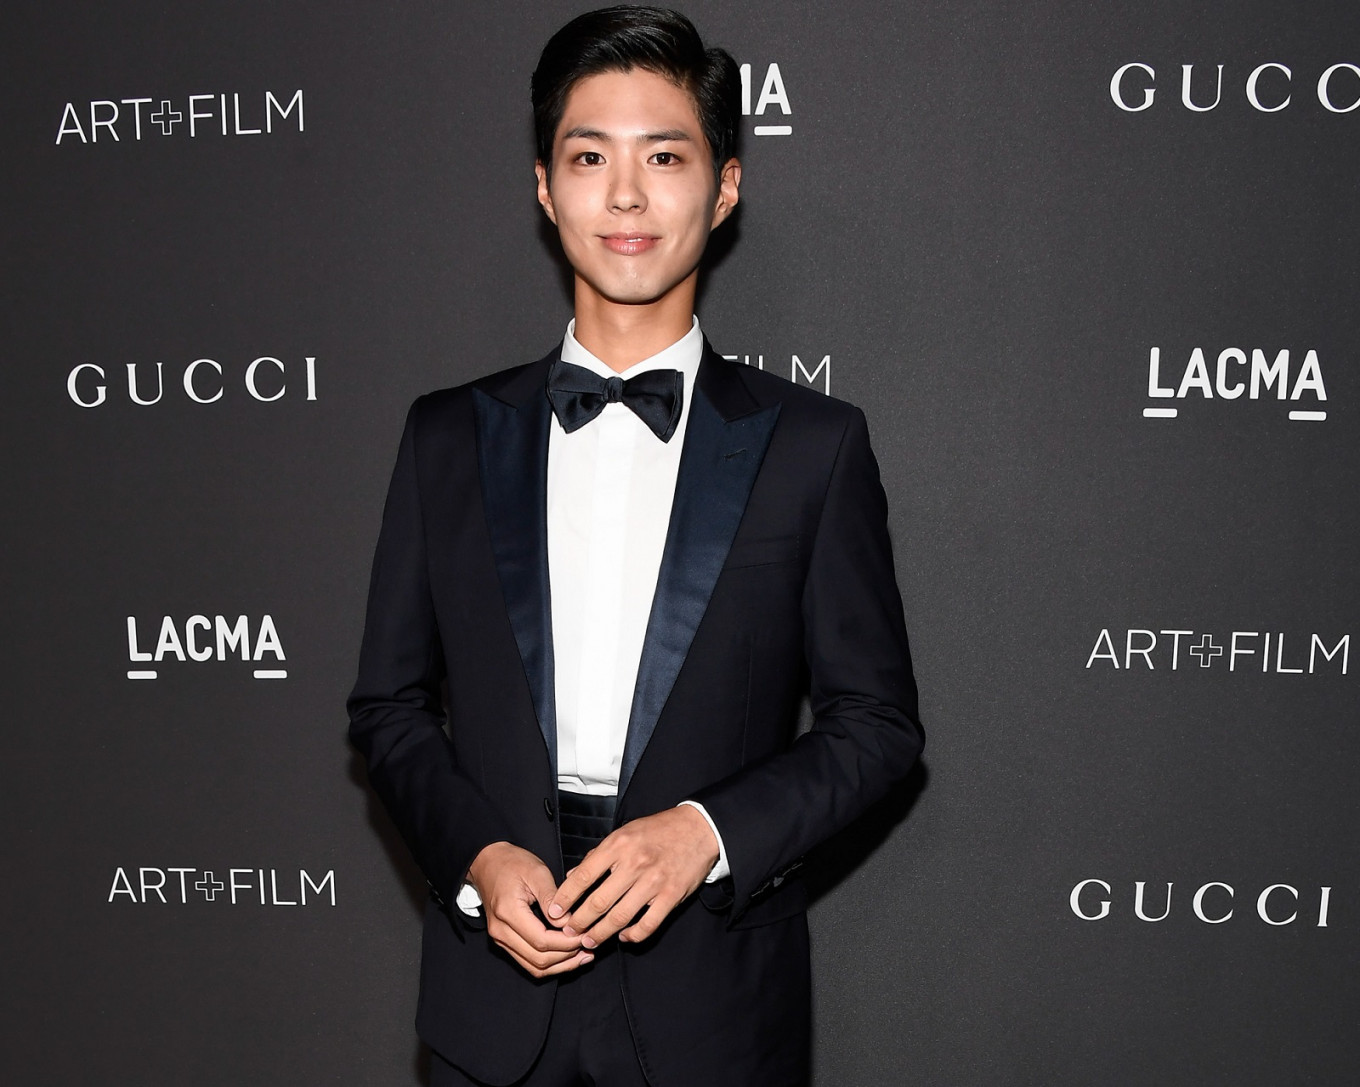 South Korean actor Park Bo-gum opens Instagram account